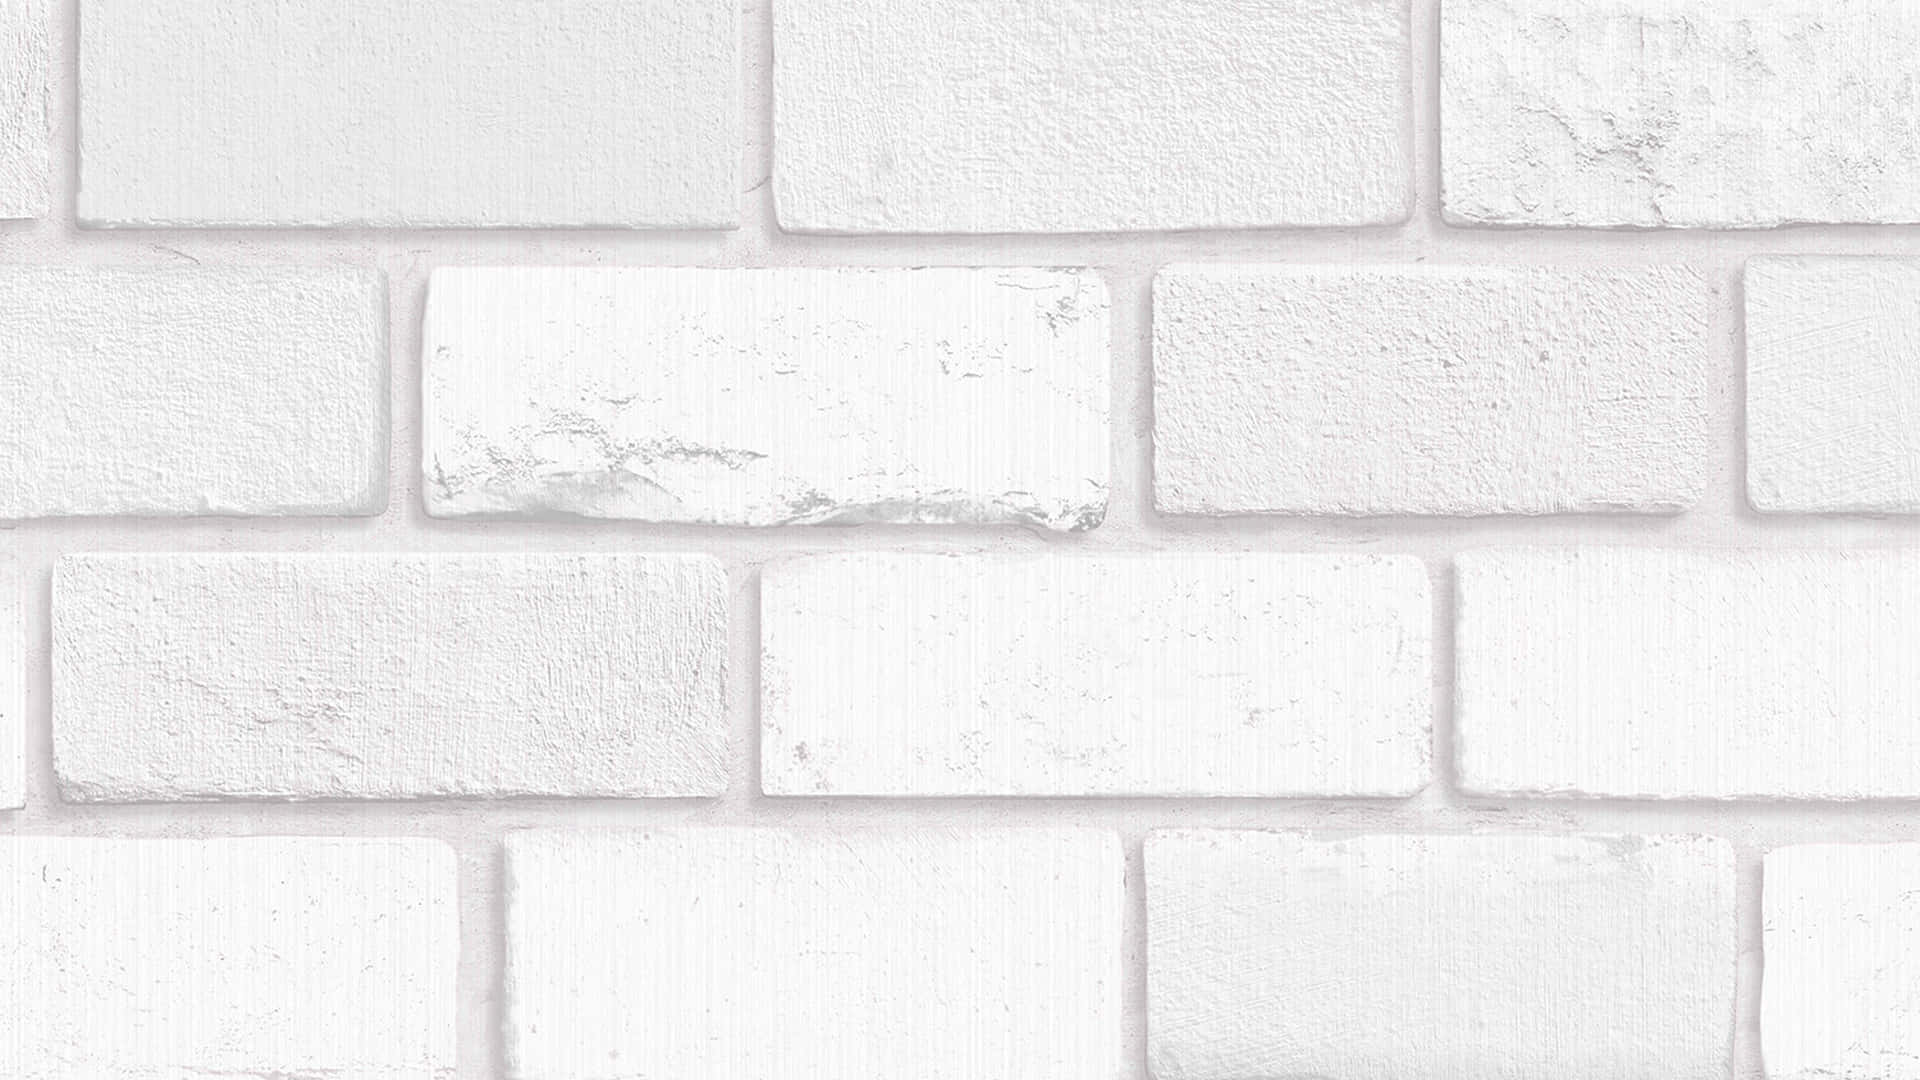 "An Inviting White Brick Wall"